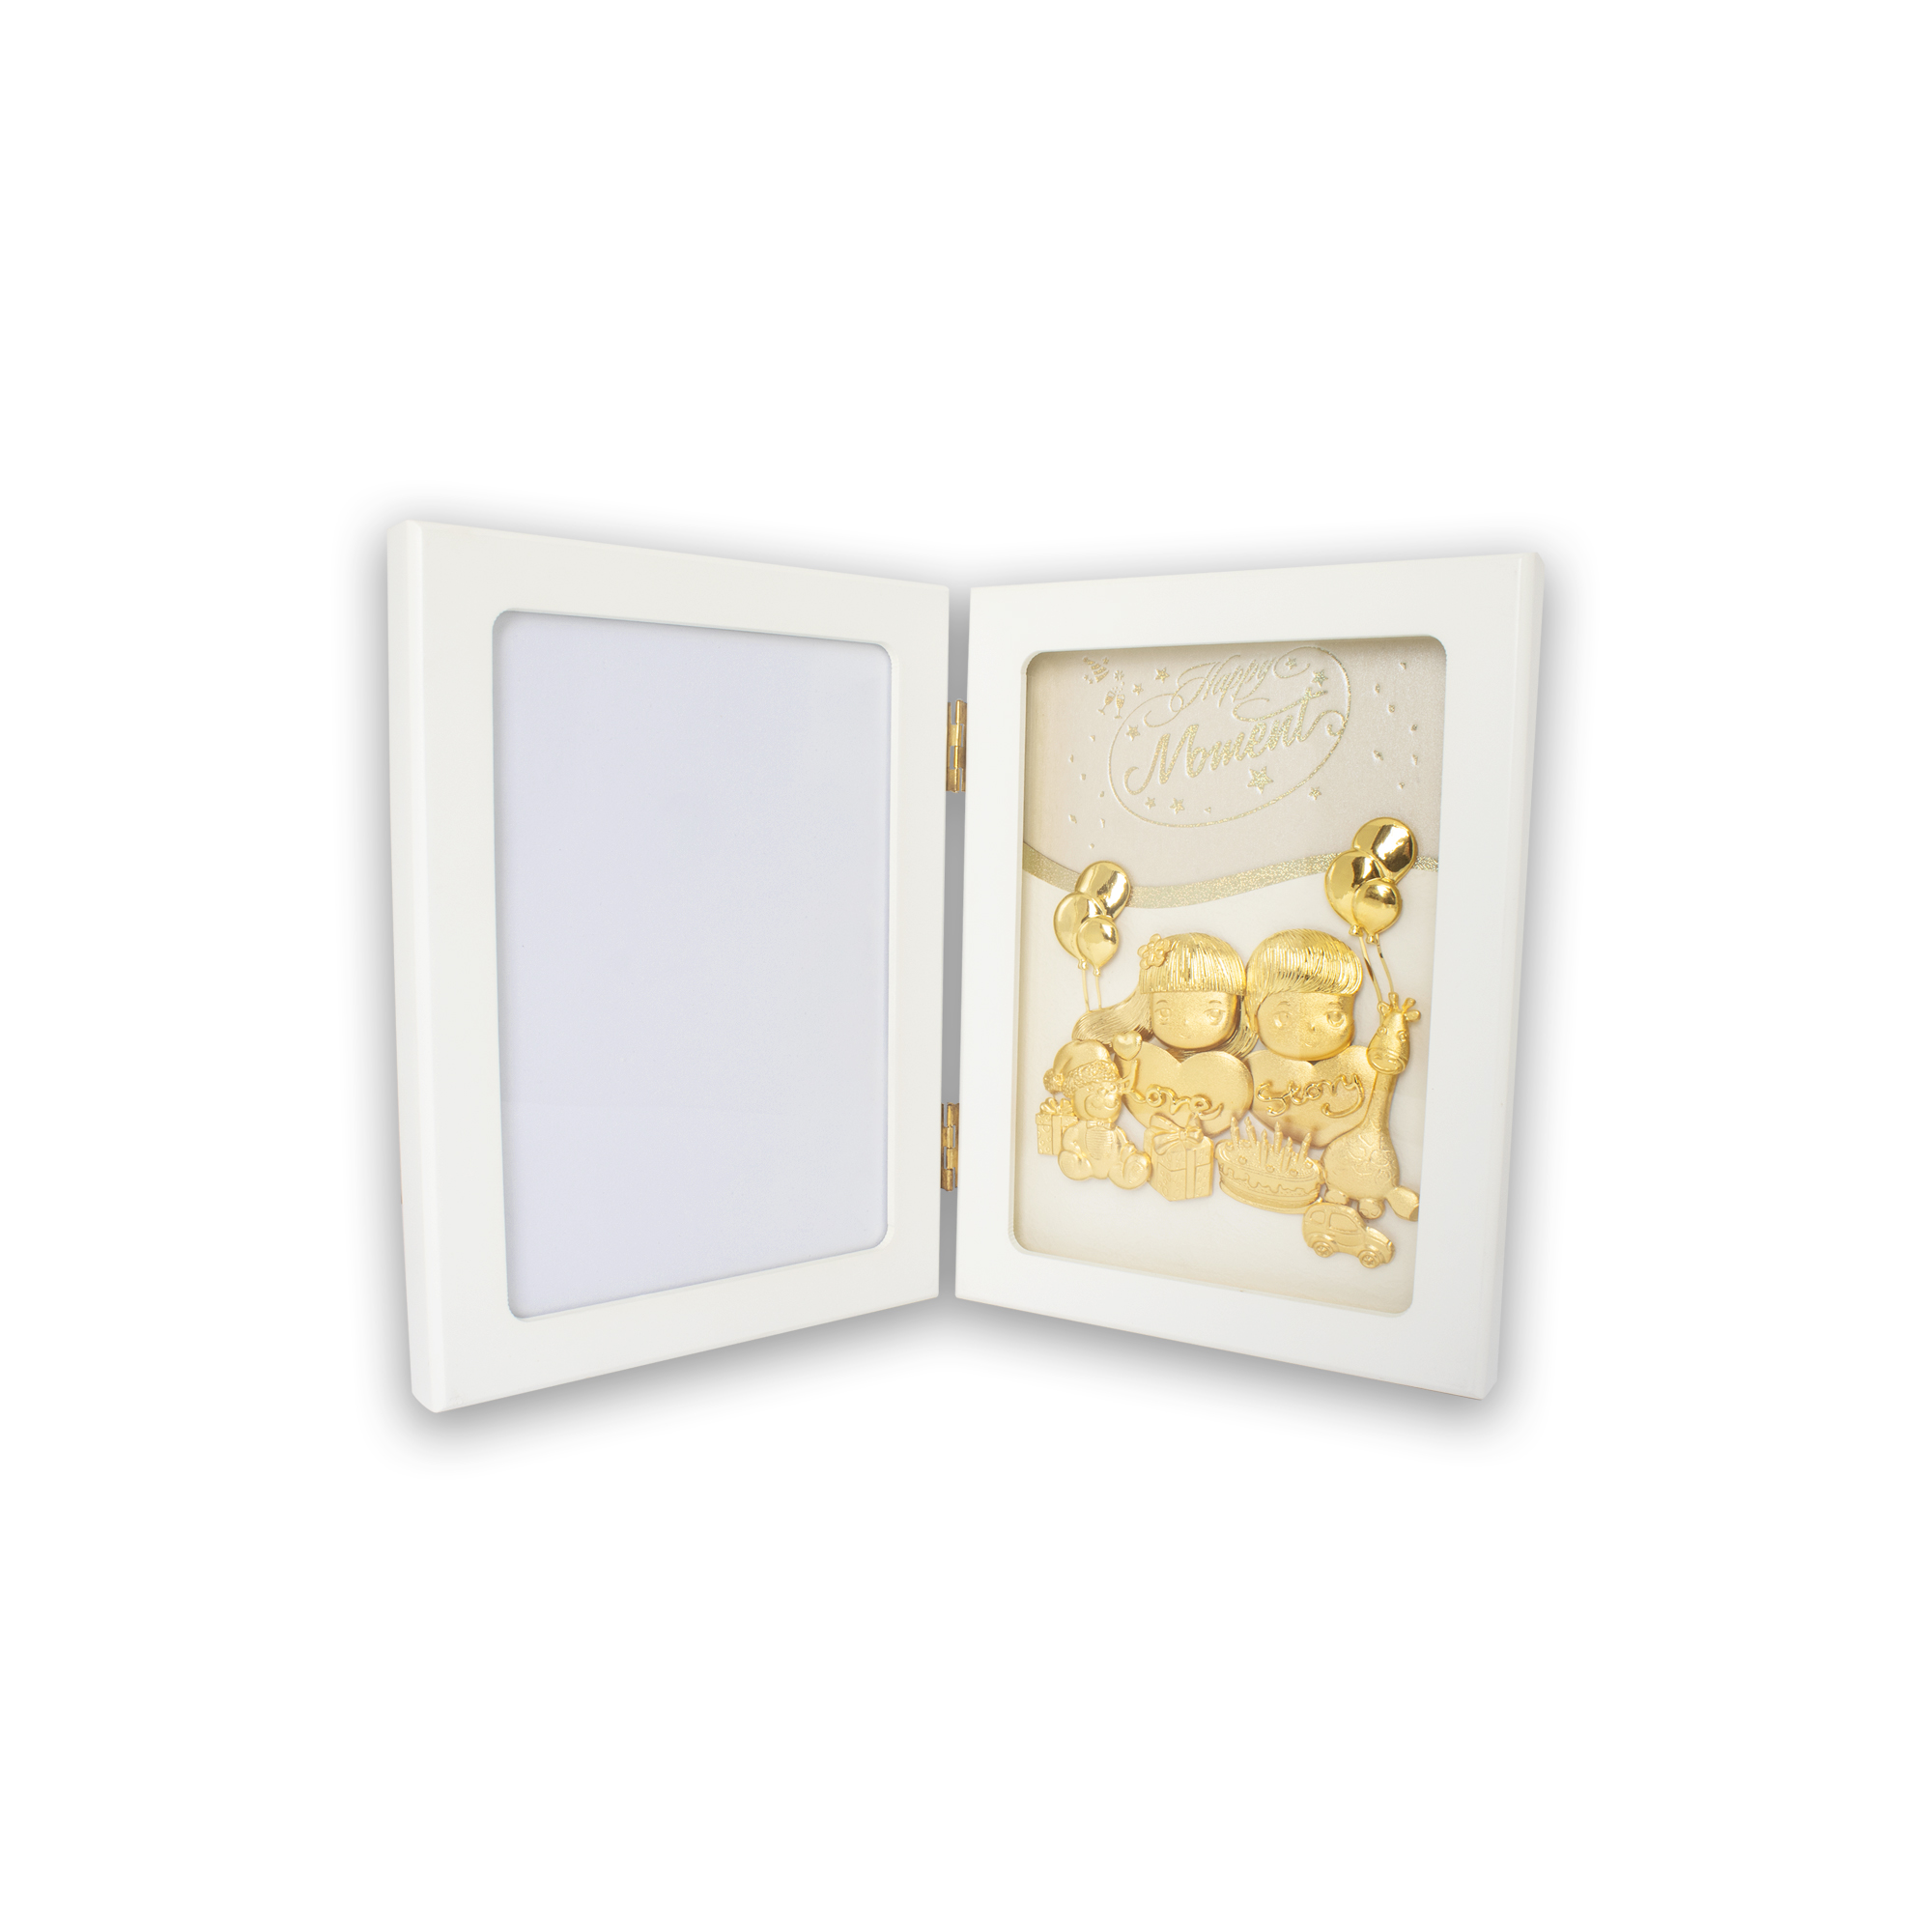 TIANSI 999 (24K) Gold Plate Happy Memory Photo Frame (Gold Foil) 快乐回忆金箔相框